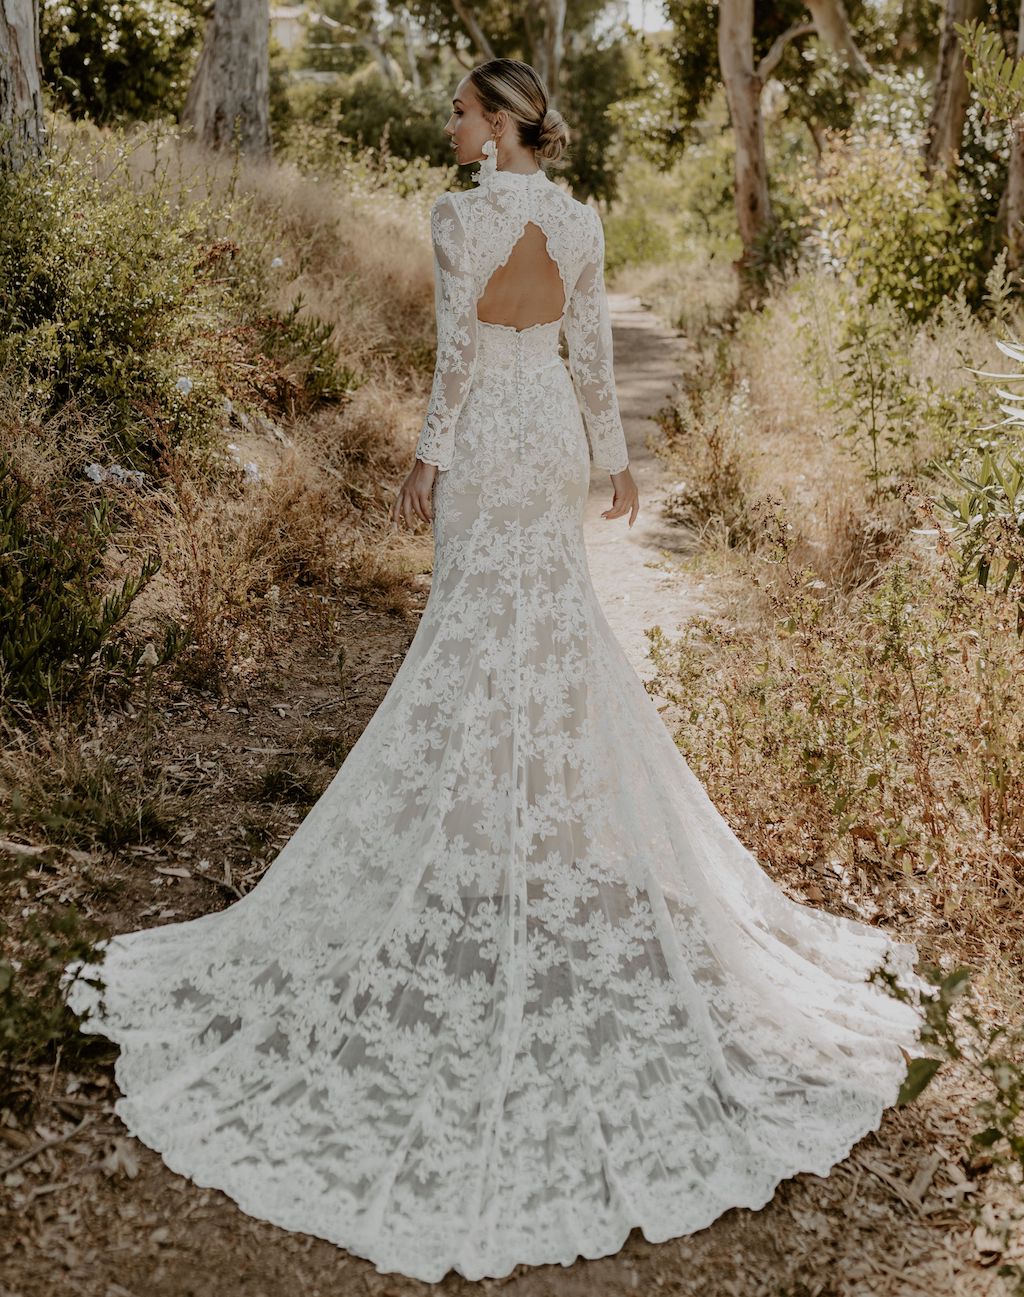 California, Illusion Lace Sleeve Wedding Dress